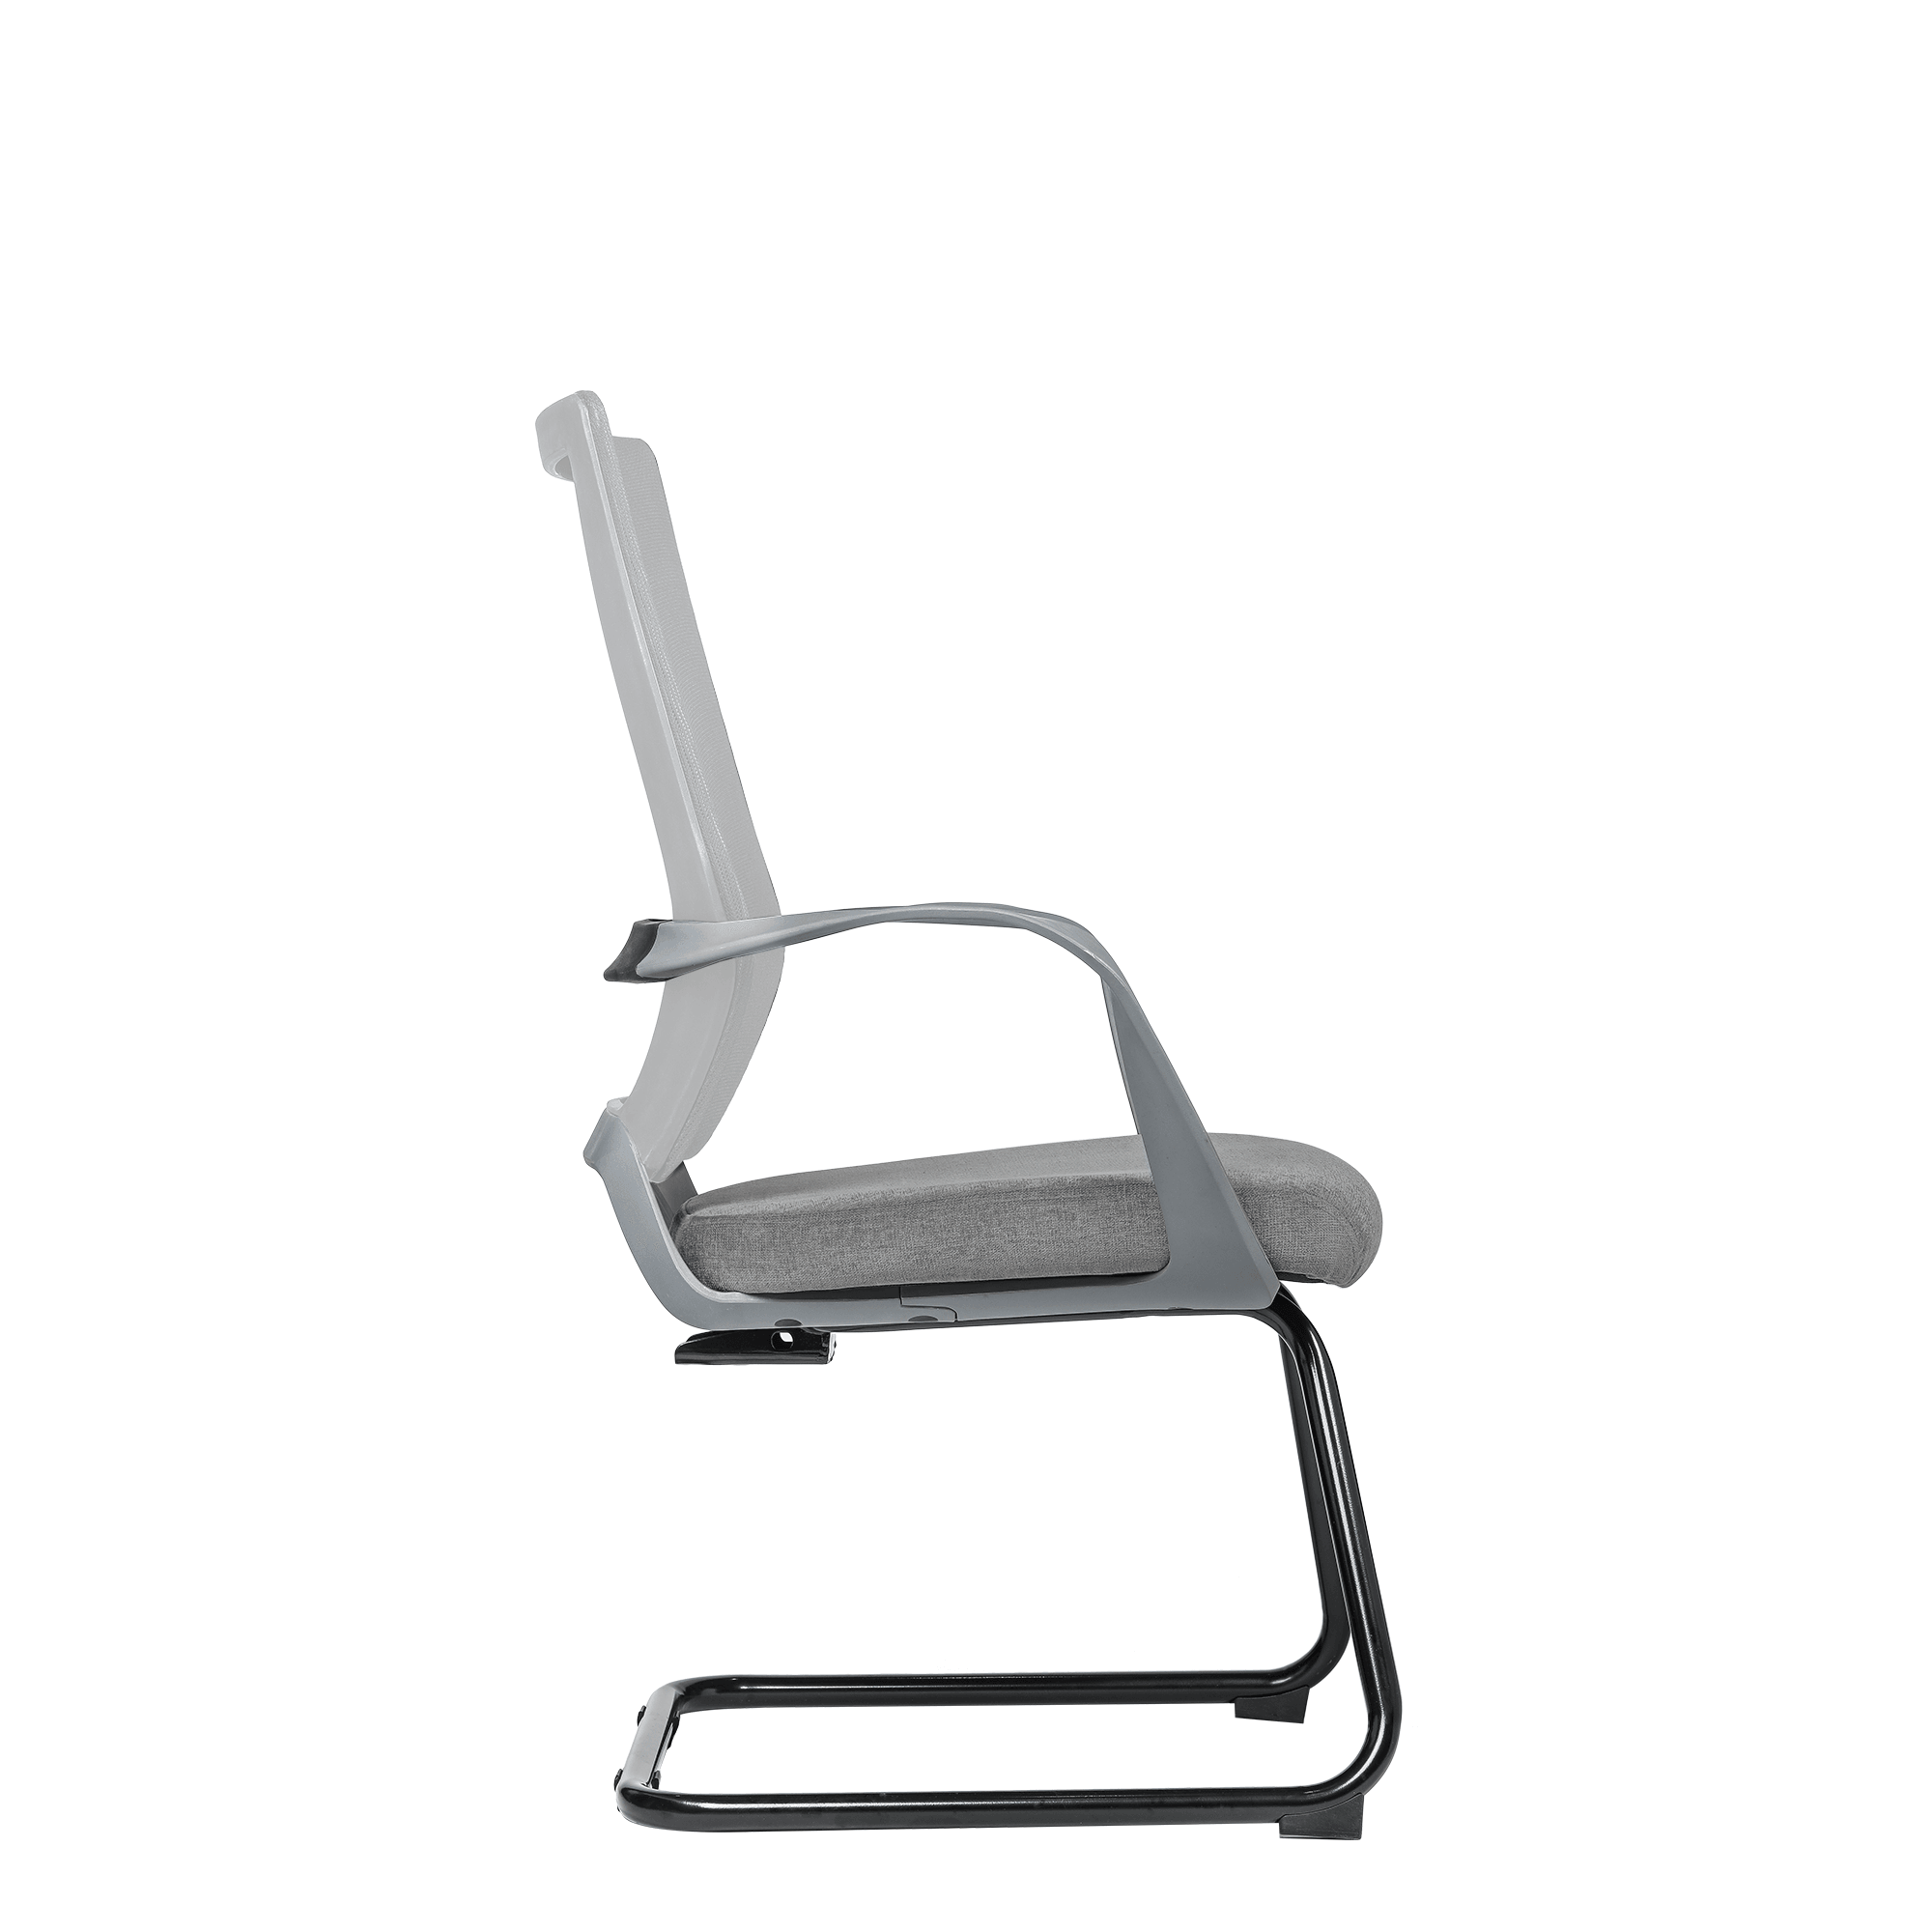 ZAK Medium Back Visitor (Grey Chair)